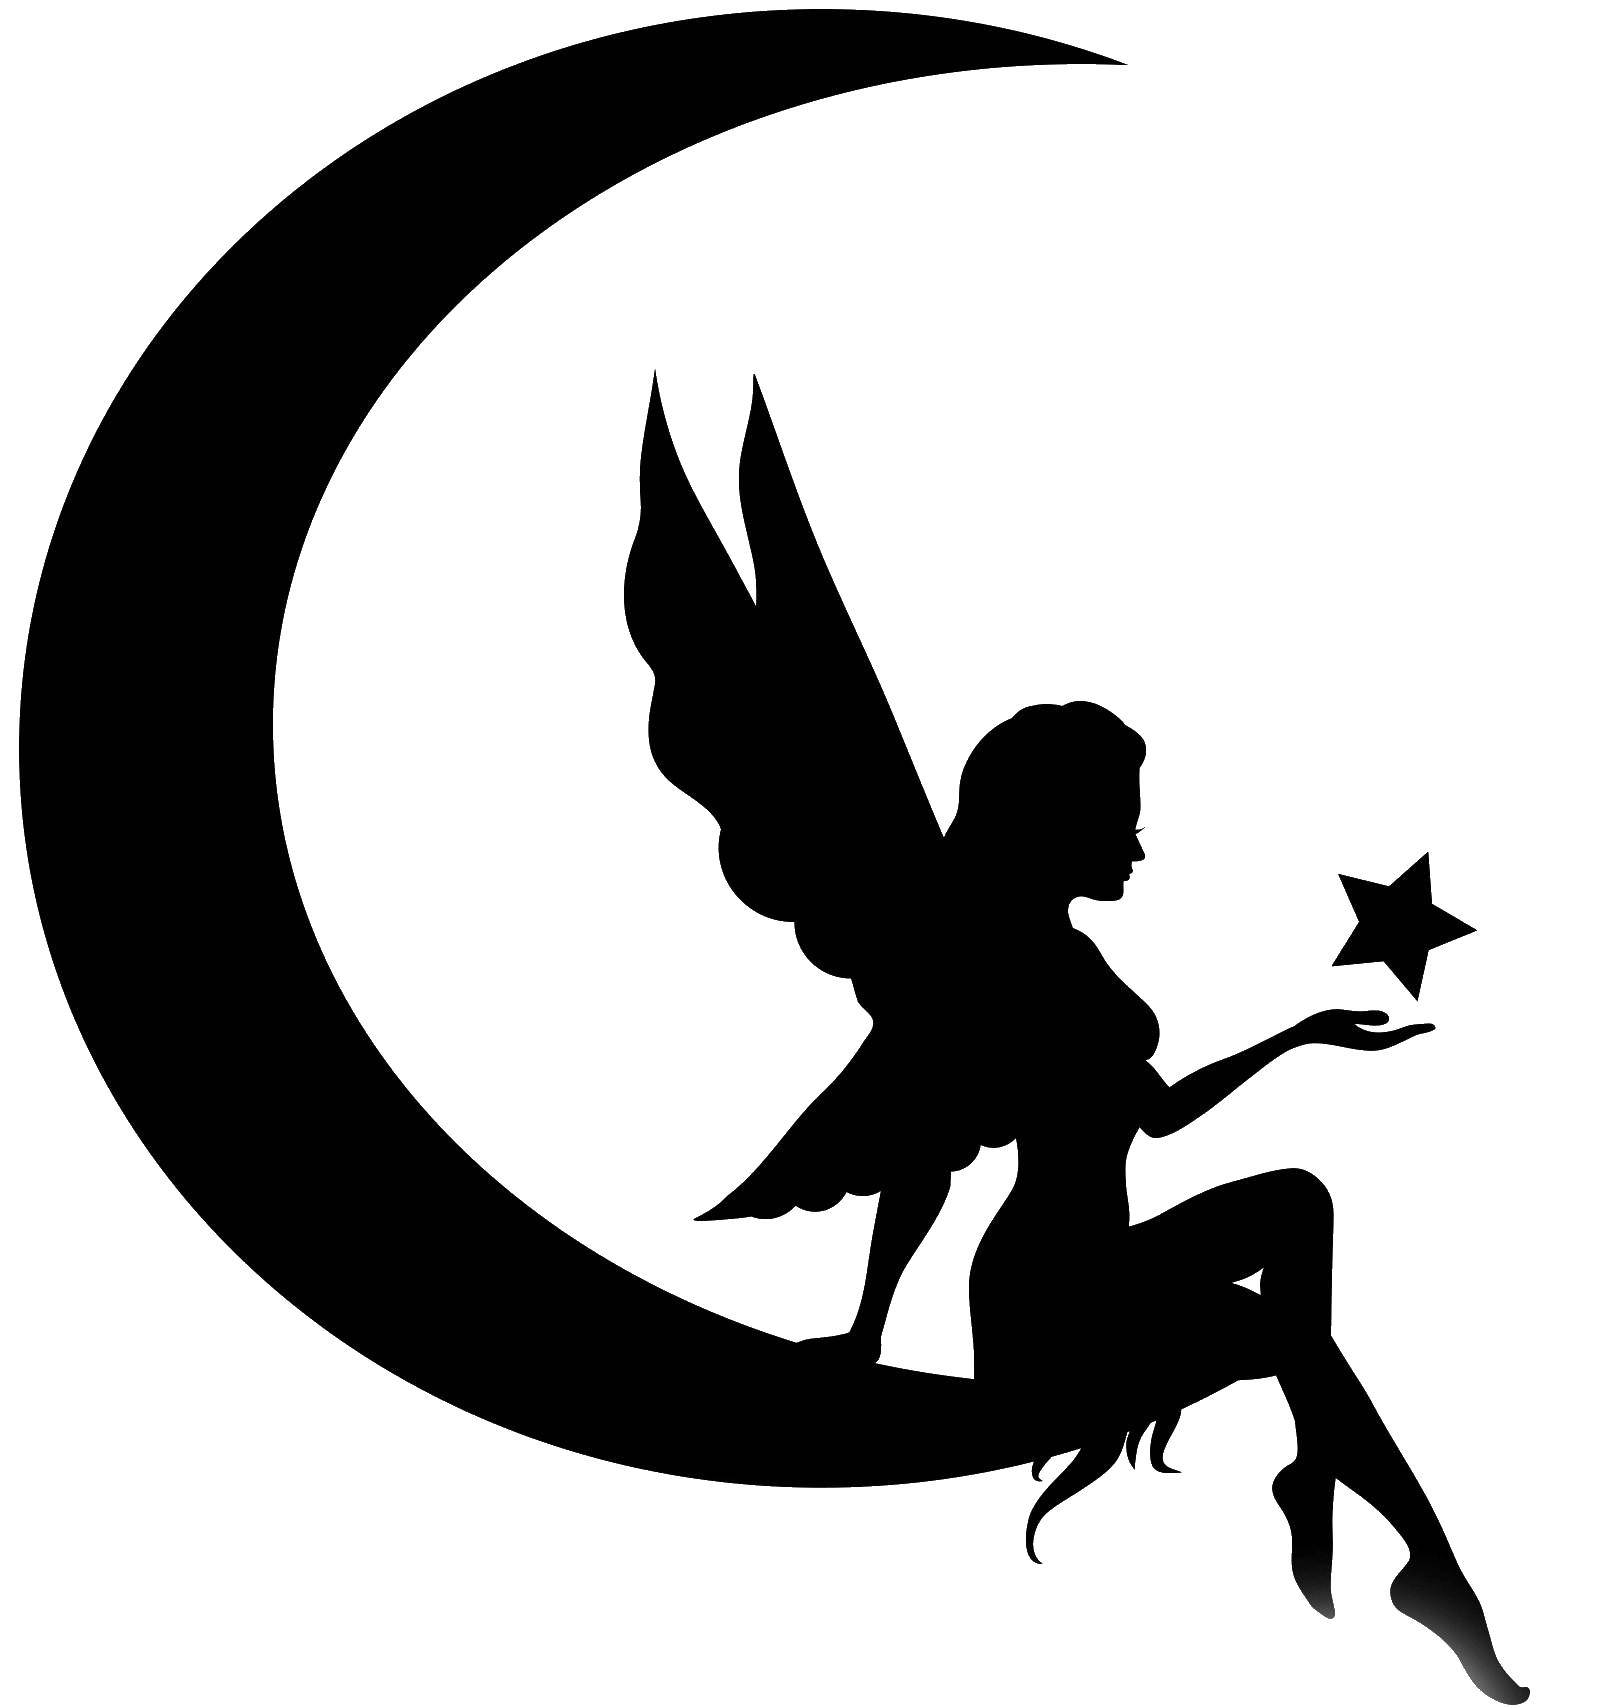 Coloring Fairy on the moon. Category fairies. Tags:  moon fairy, star.